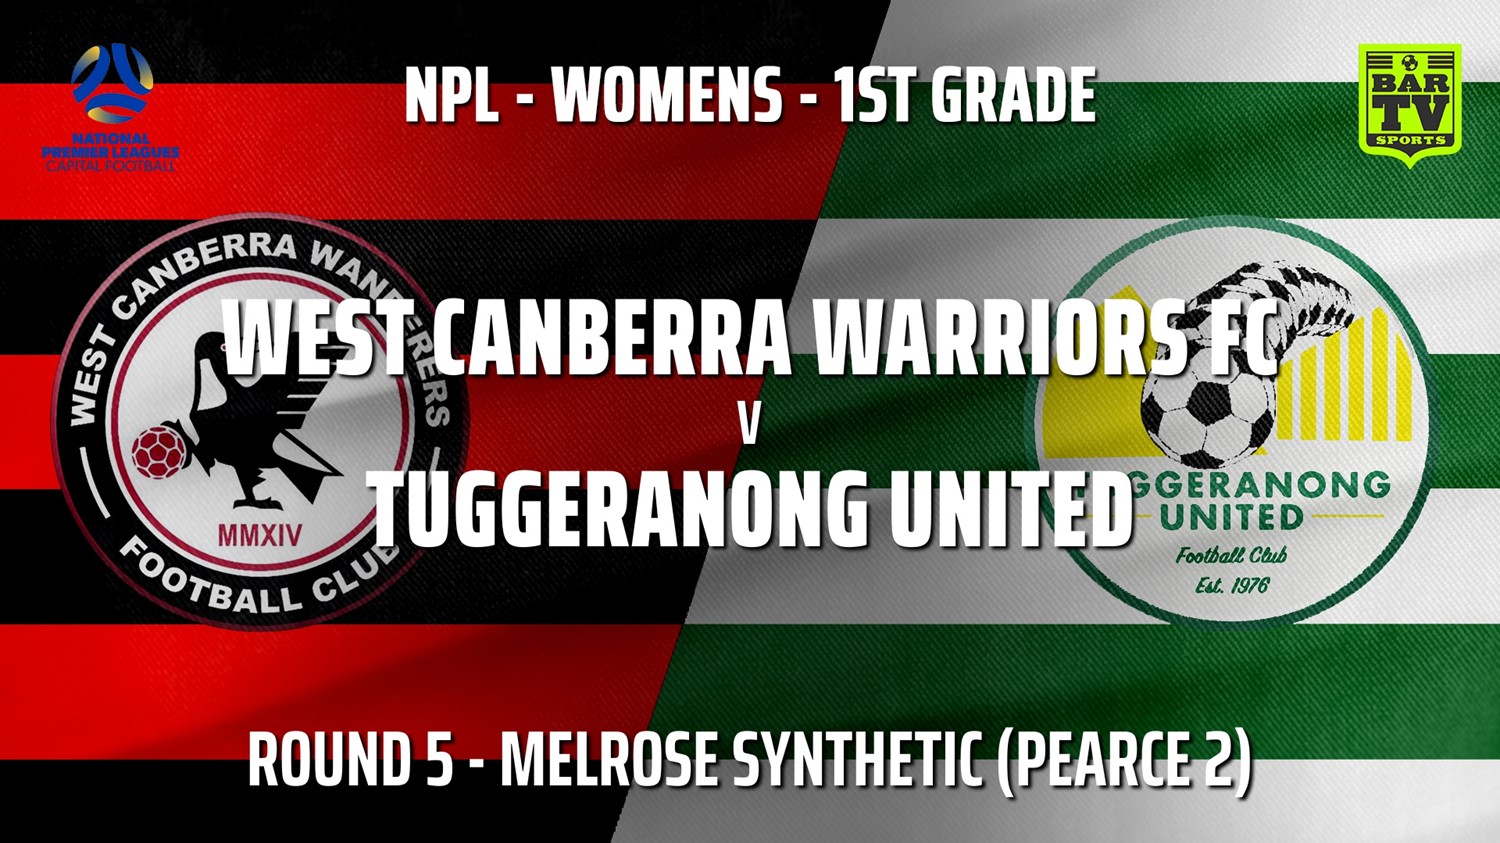 210509-NPLW - Capital Round 5 - West Canberra Warriors FC (women) v Tuggeranong United FC (women) Minigame Slate Image